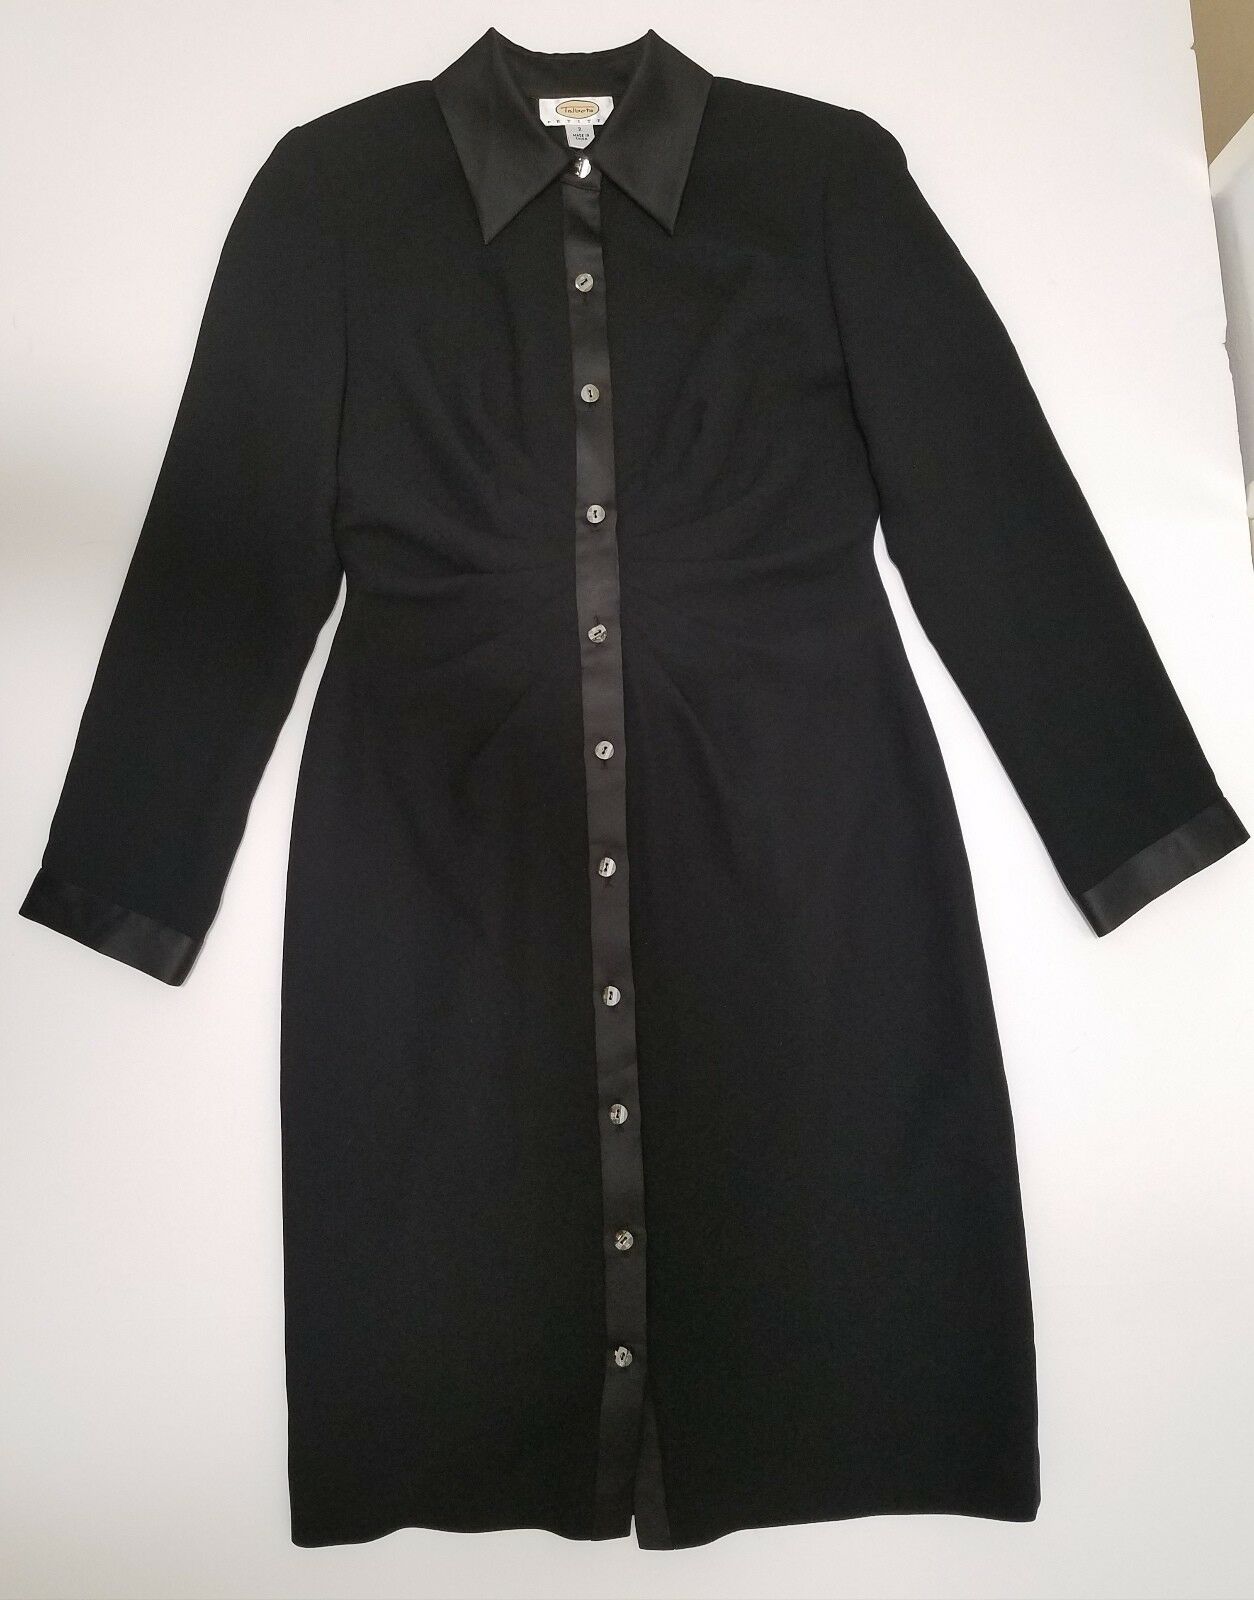 Talbots Dress Suit Button-up Long Sleeve Black